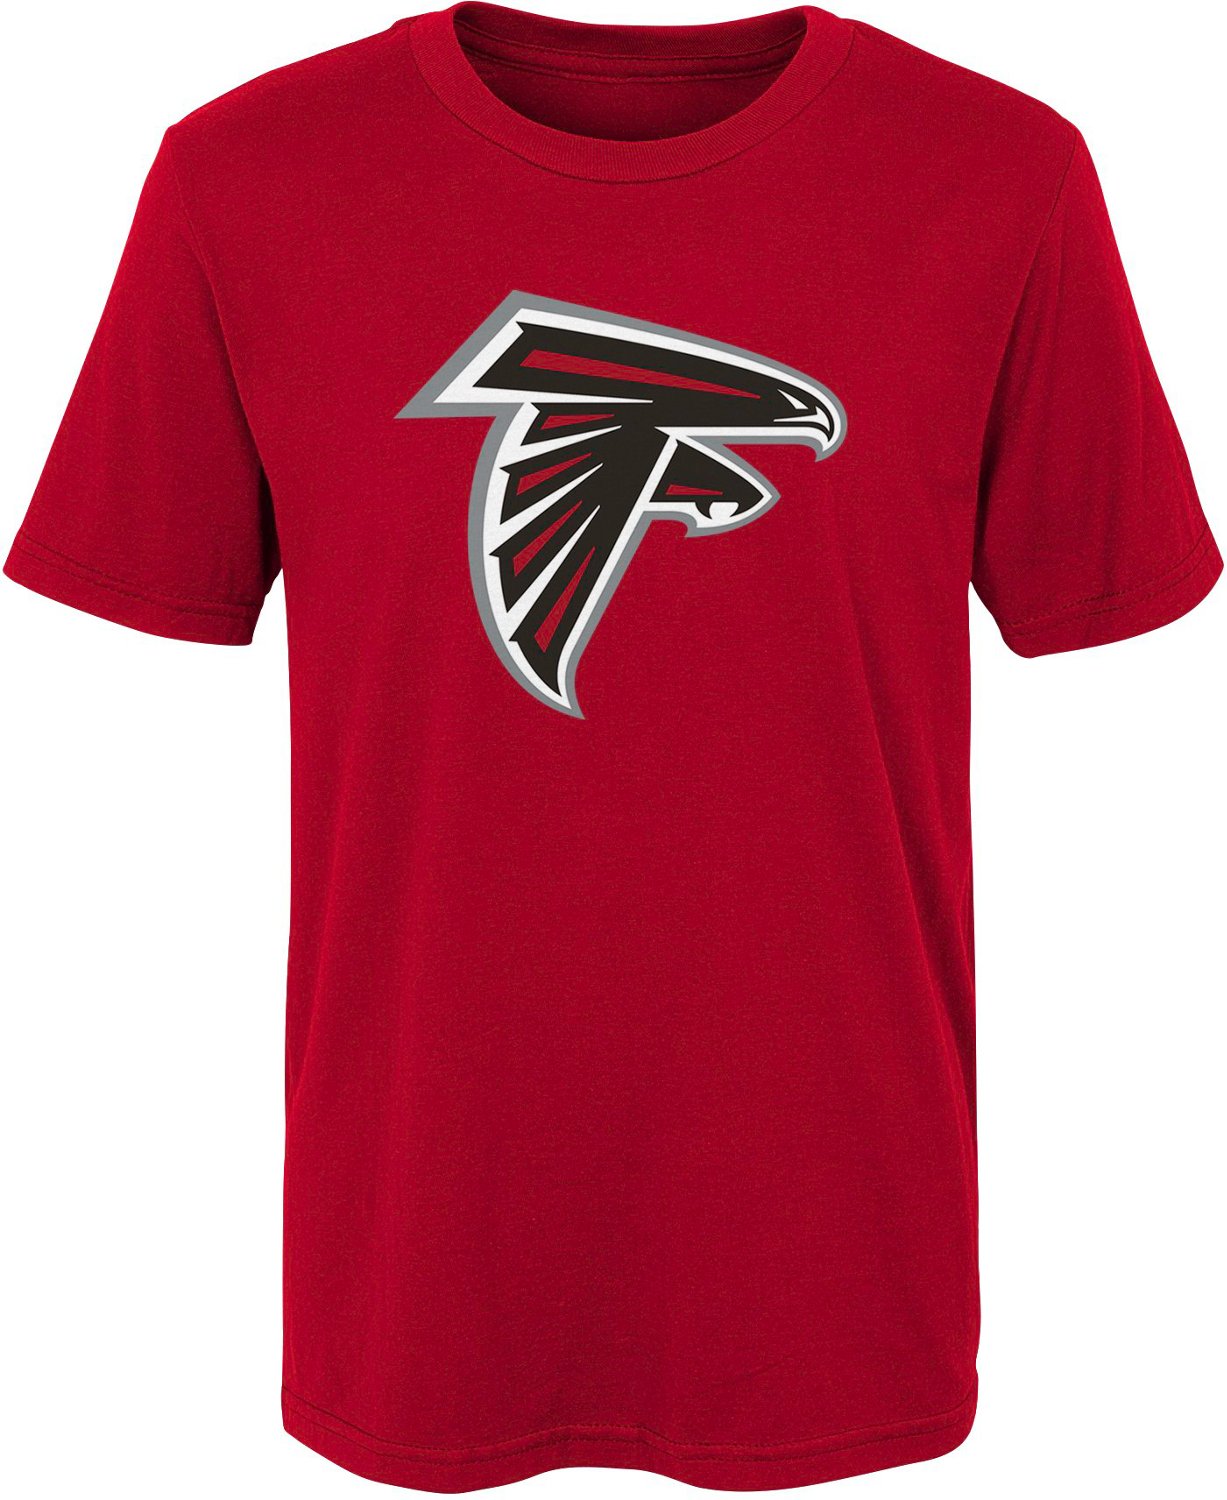 NFL Boys' 4-7 Atlanta Falcons Primary Logo T-shirt | Academy